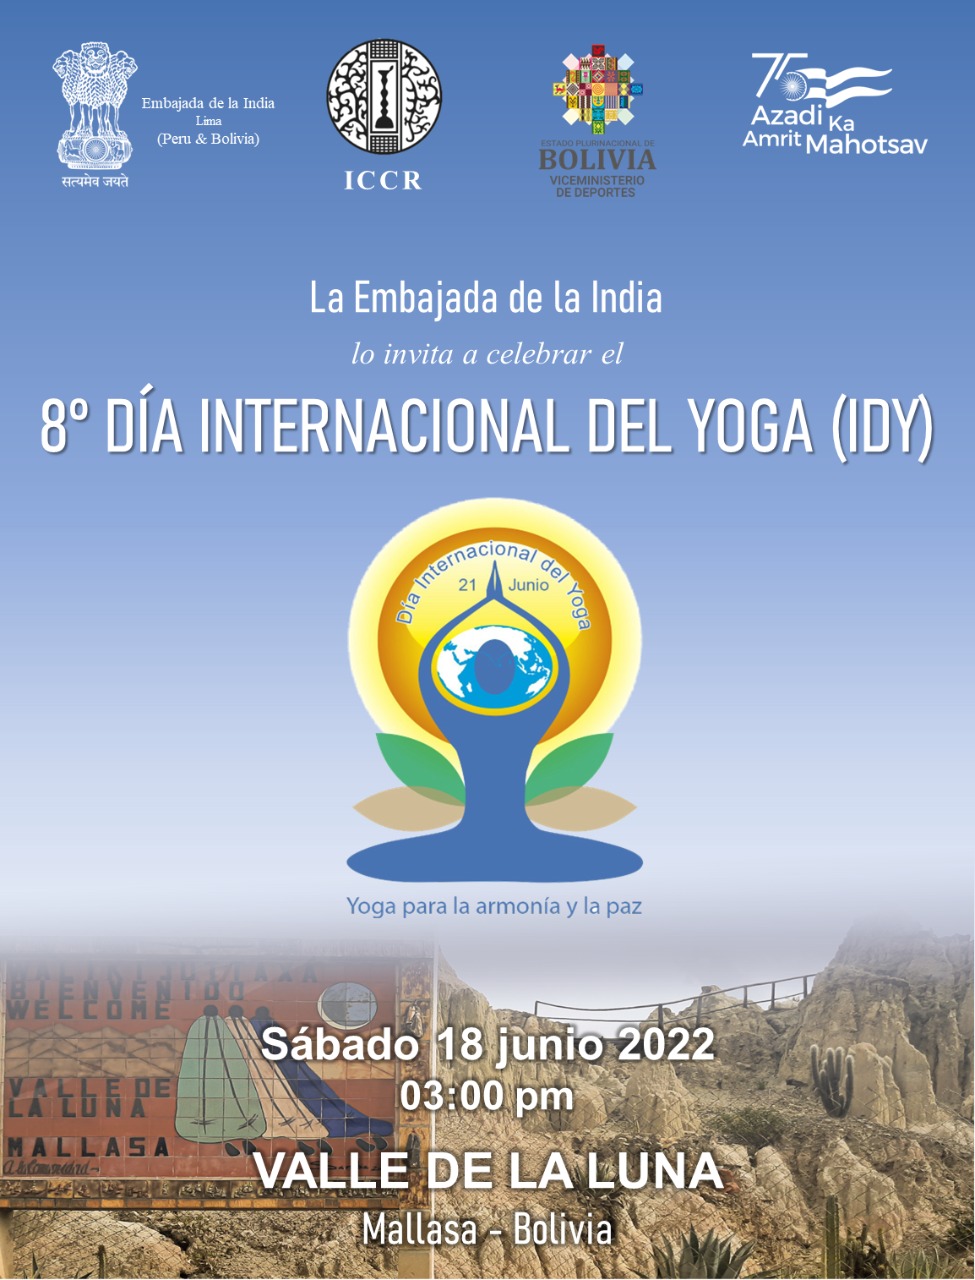 Celebration of 8th International Day of Yoga 2022 - Event organised in Valle de la Luna, Bolivia